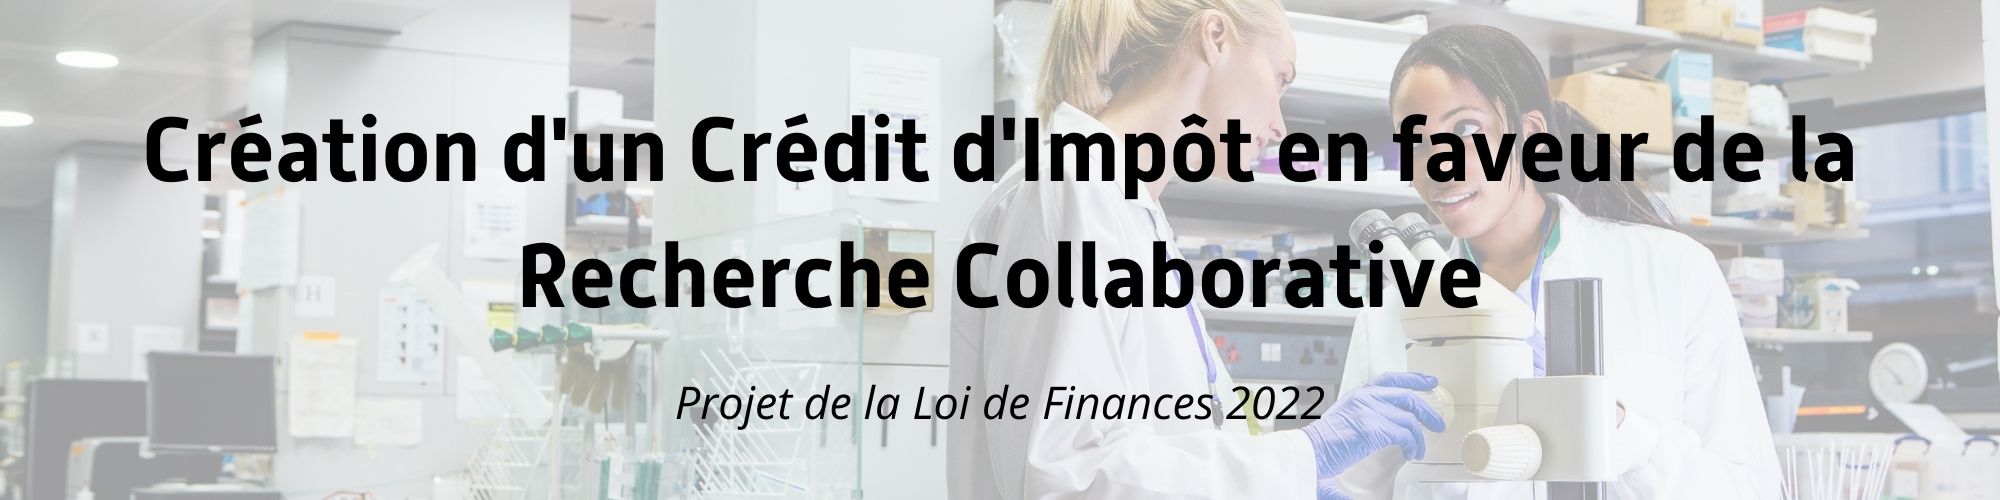 innovation_credit_impot_recherche_collaborative